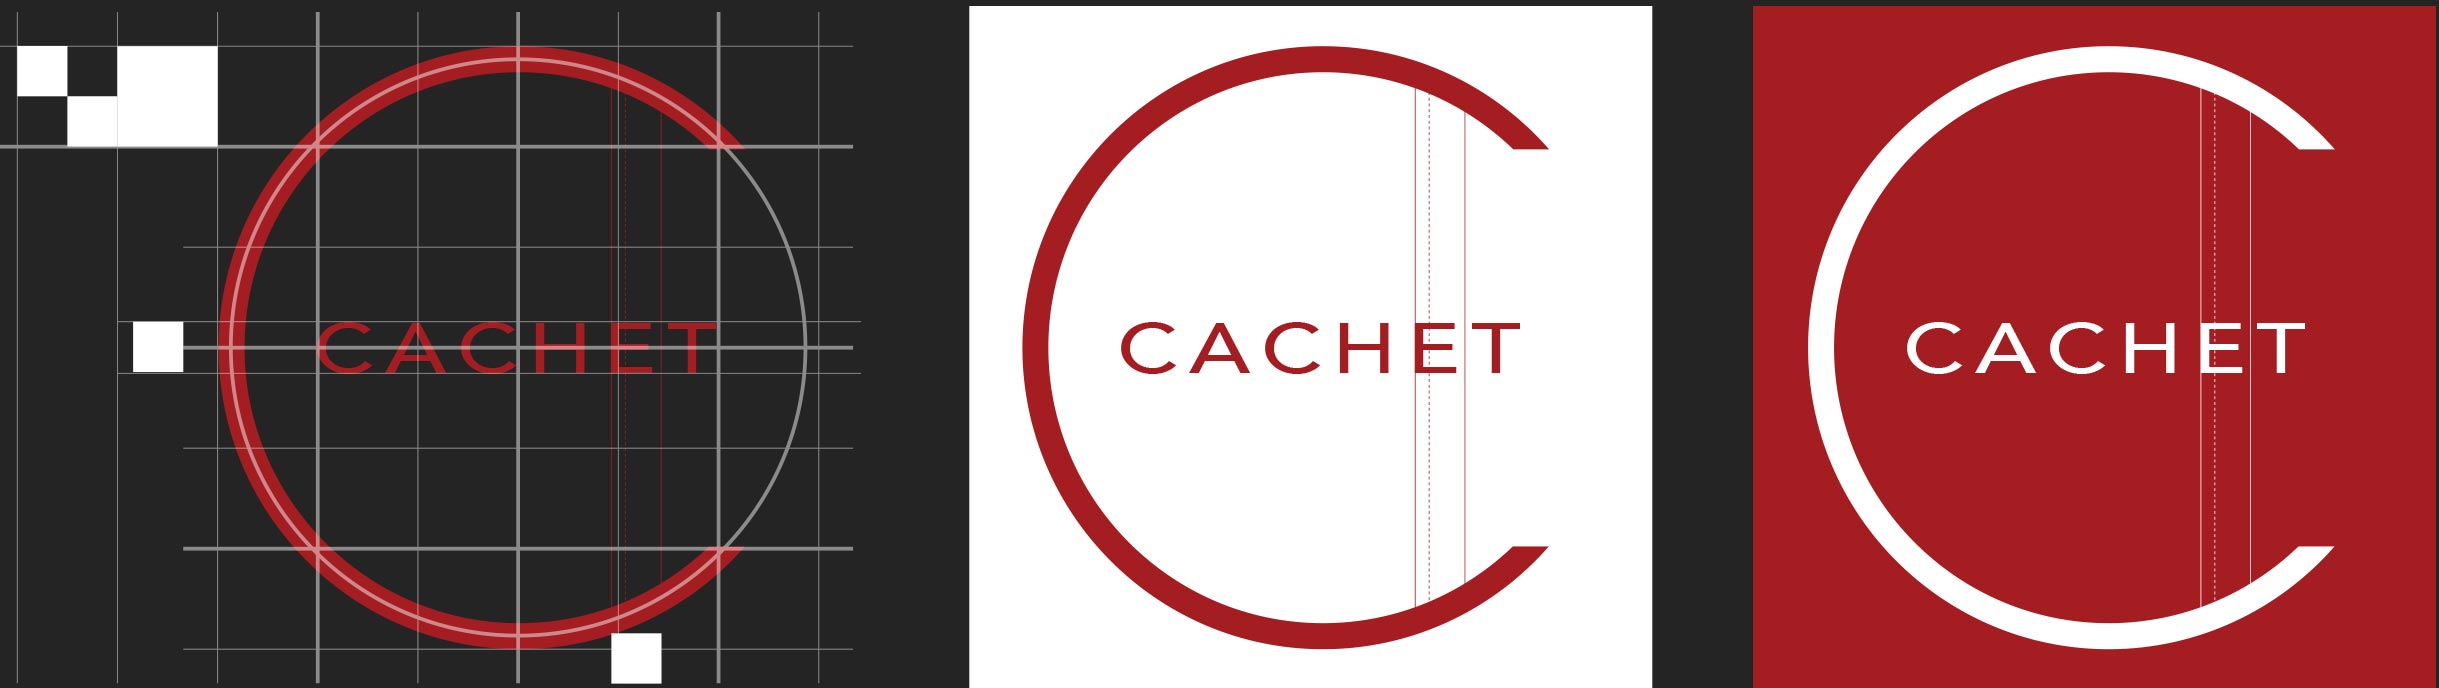 Cachet Logo Design
					